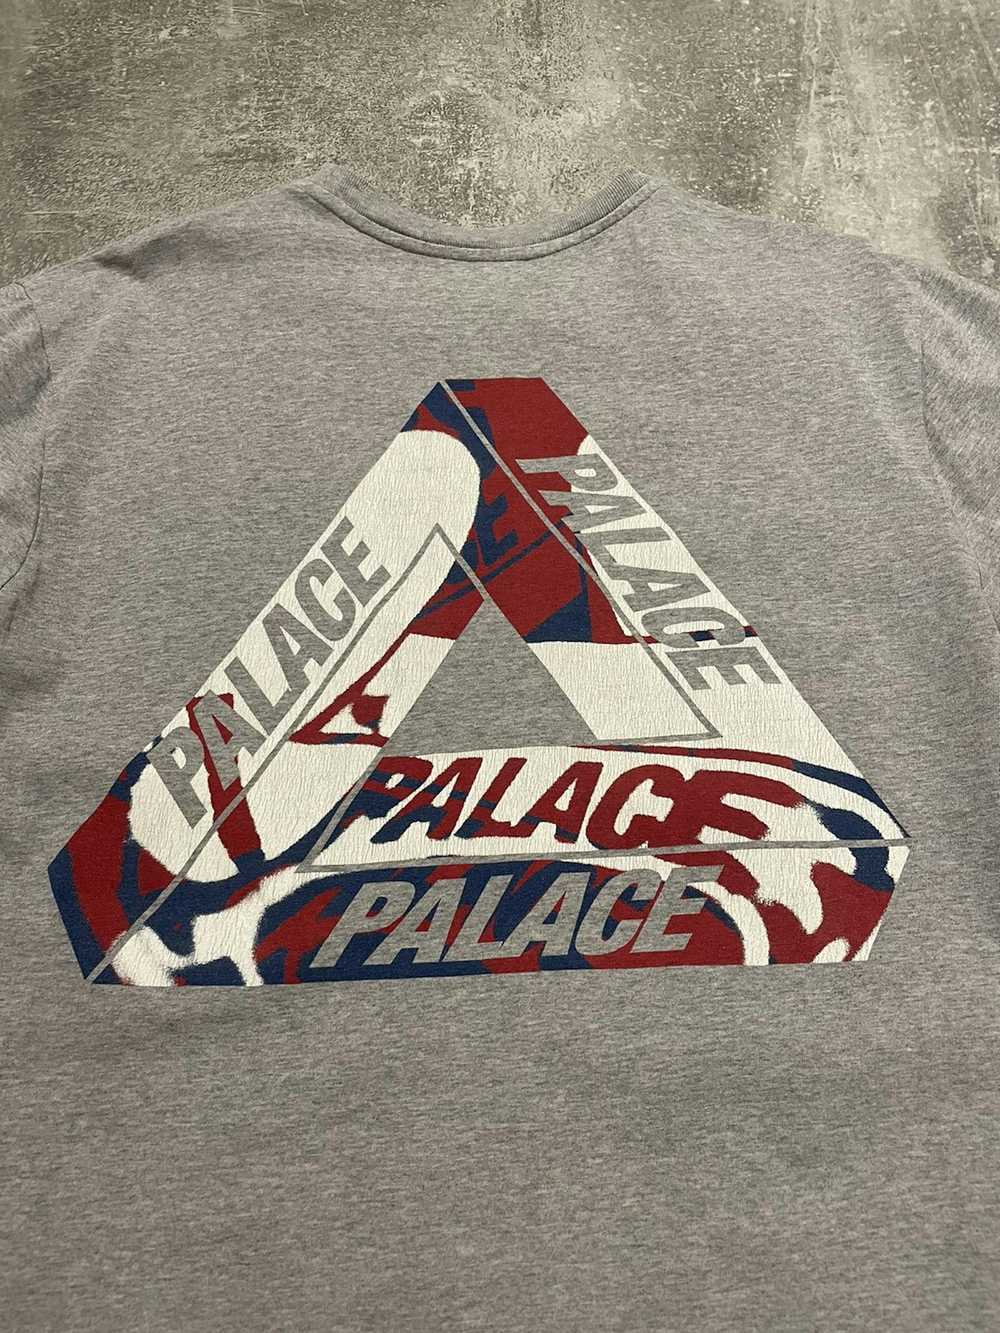 Palace Palace Tri-Ferg T-Shirt Rare - image 2